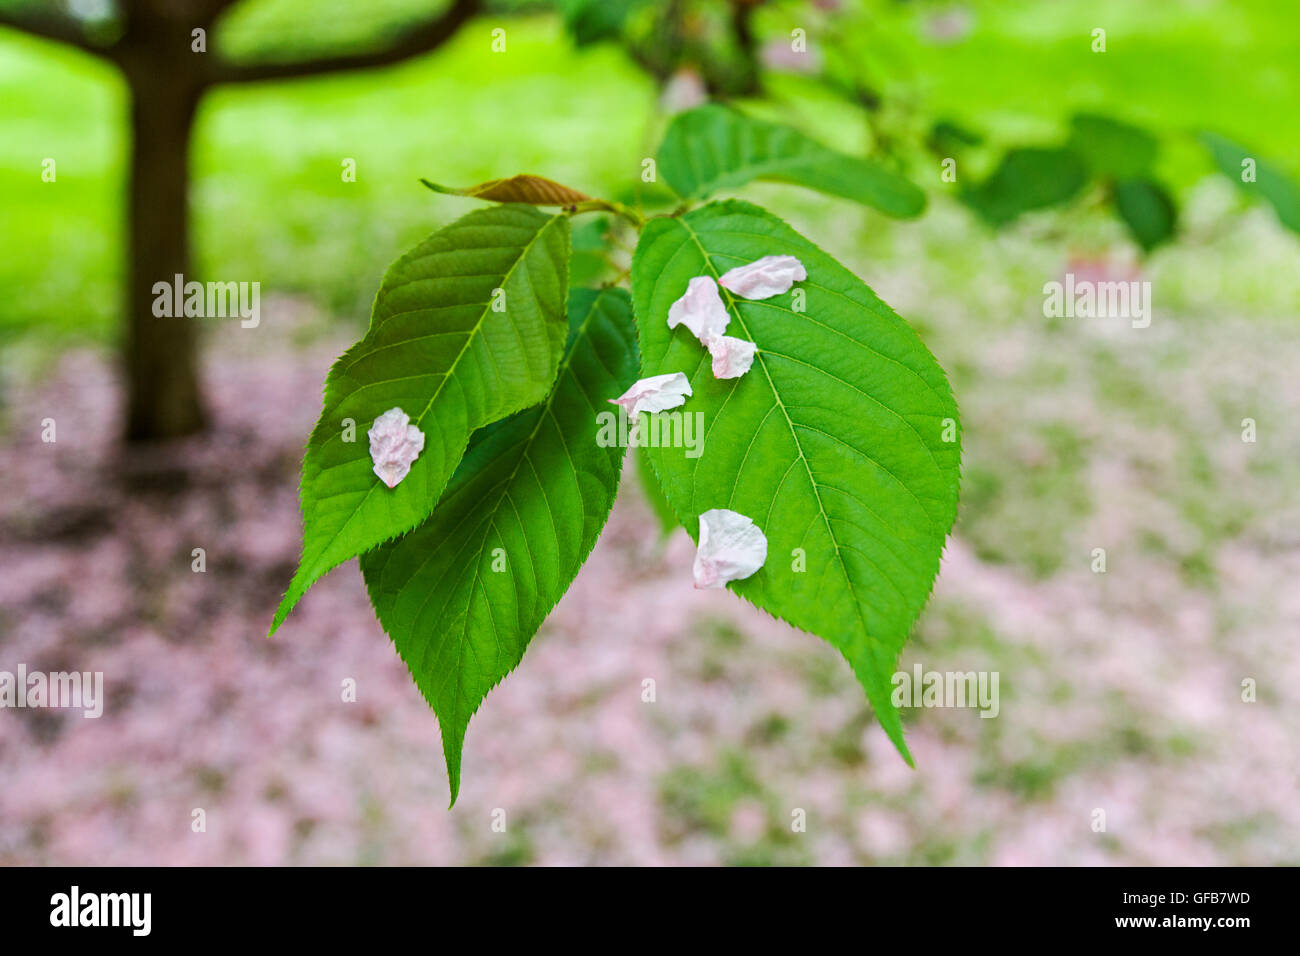 Japanese Cherry blossom petals on tree leaves Stock Photo